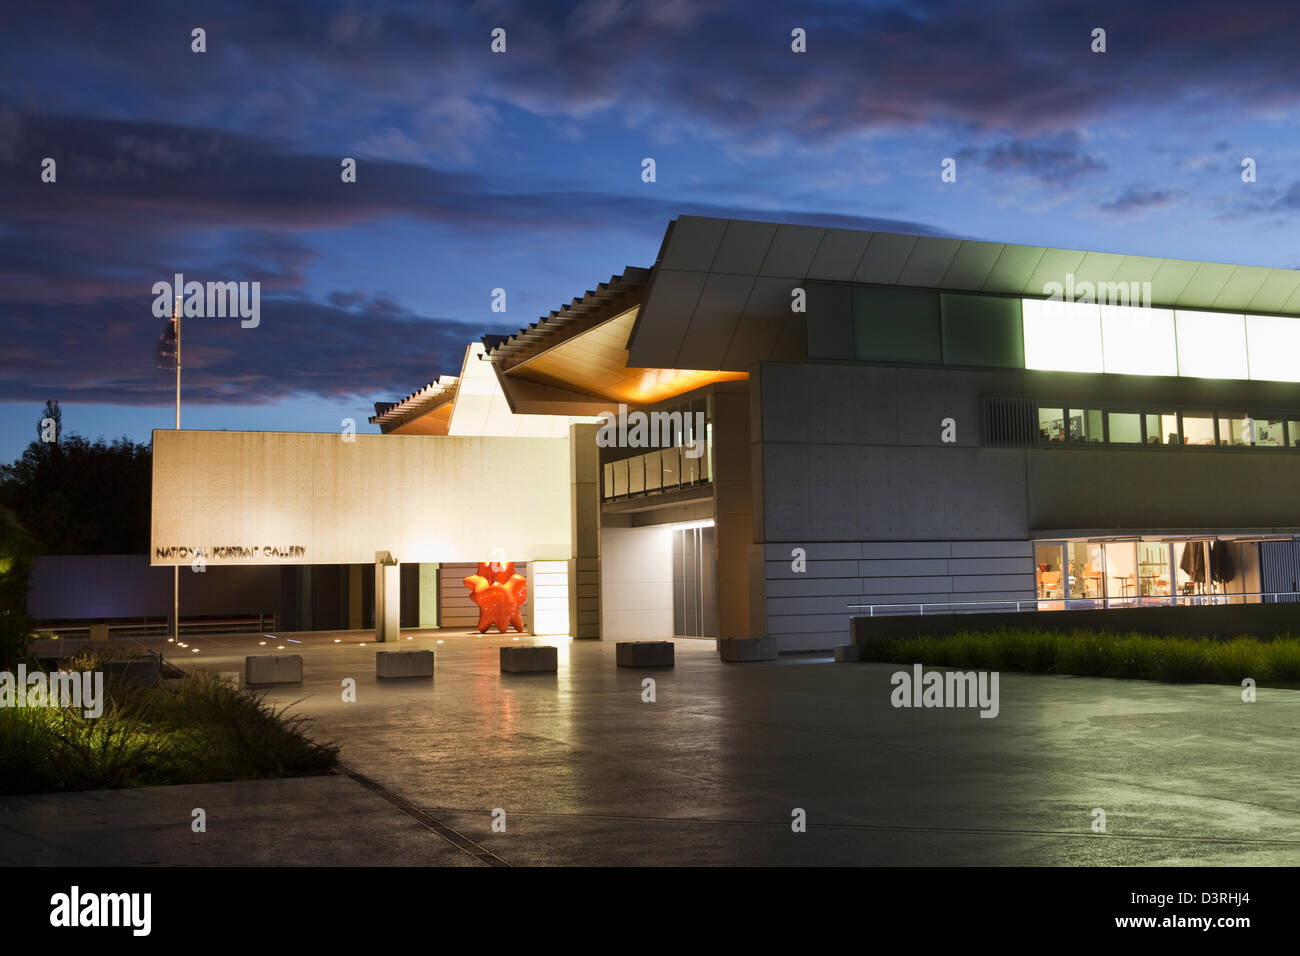 National Portrait Gallery nachts beleuchtet. Canberra, Australian Capital Territory (ACT), Australien Stockfoto